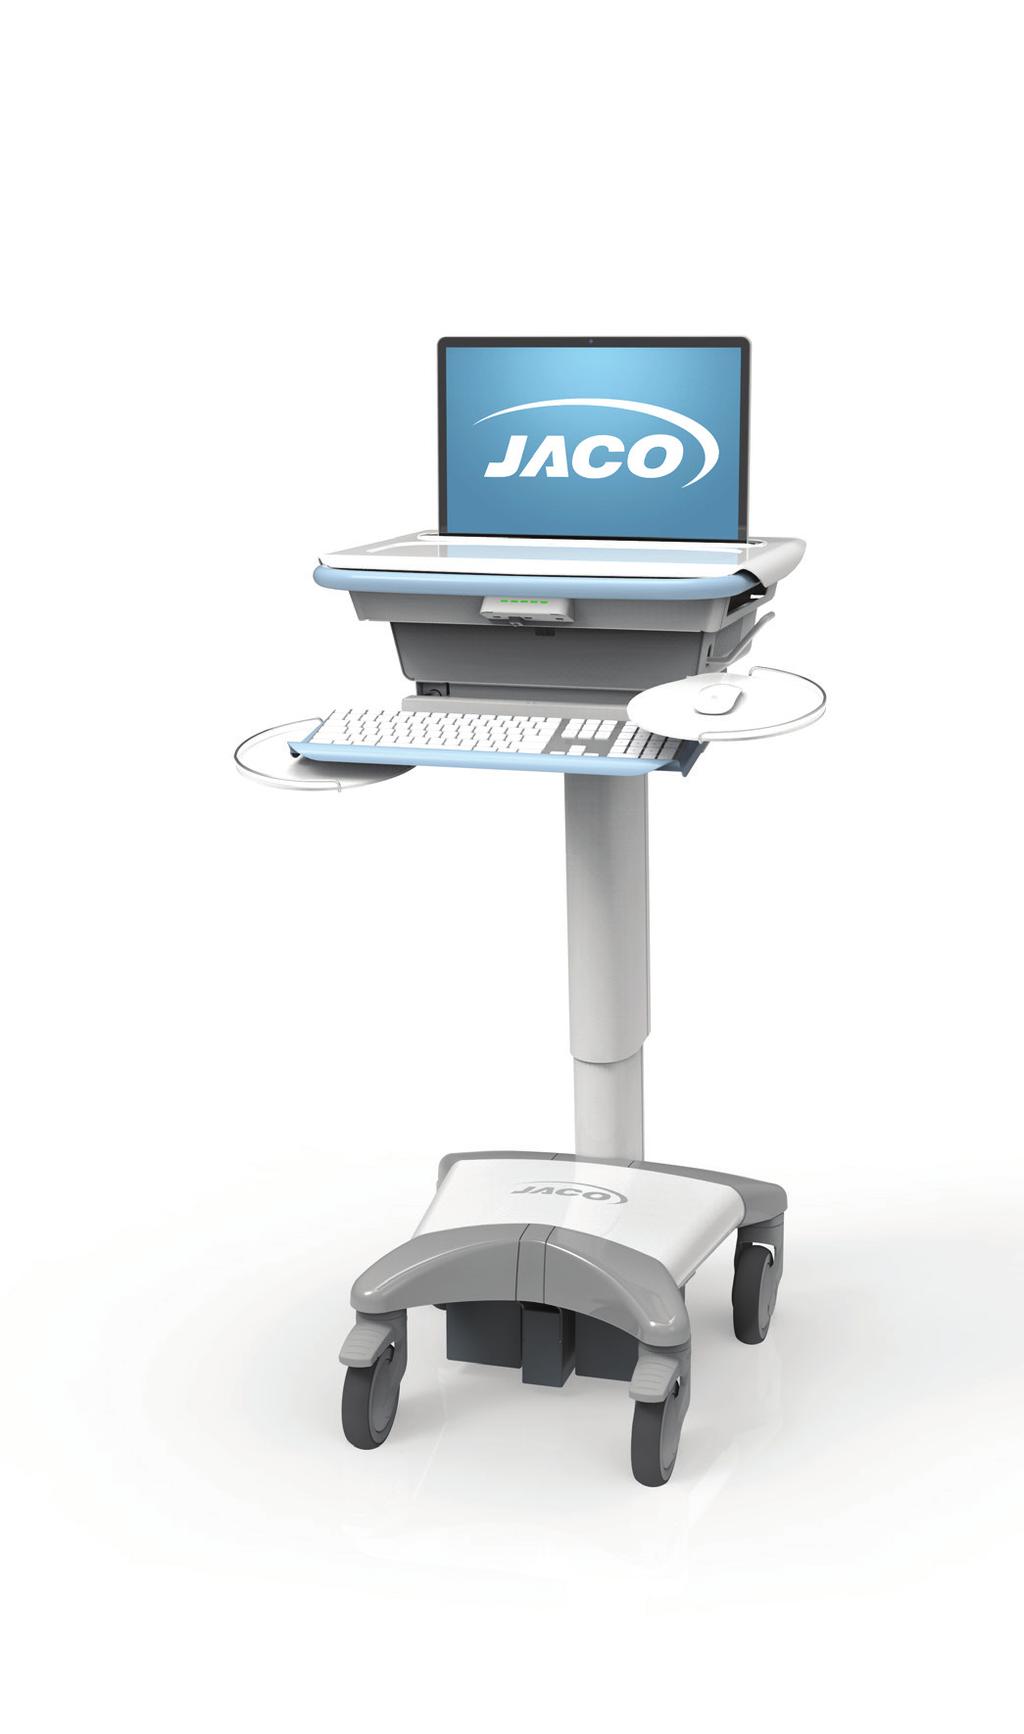 warranty on batteries Jaco extends OEM warranties for supplied components.